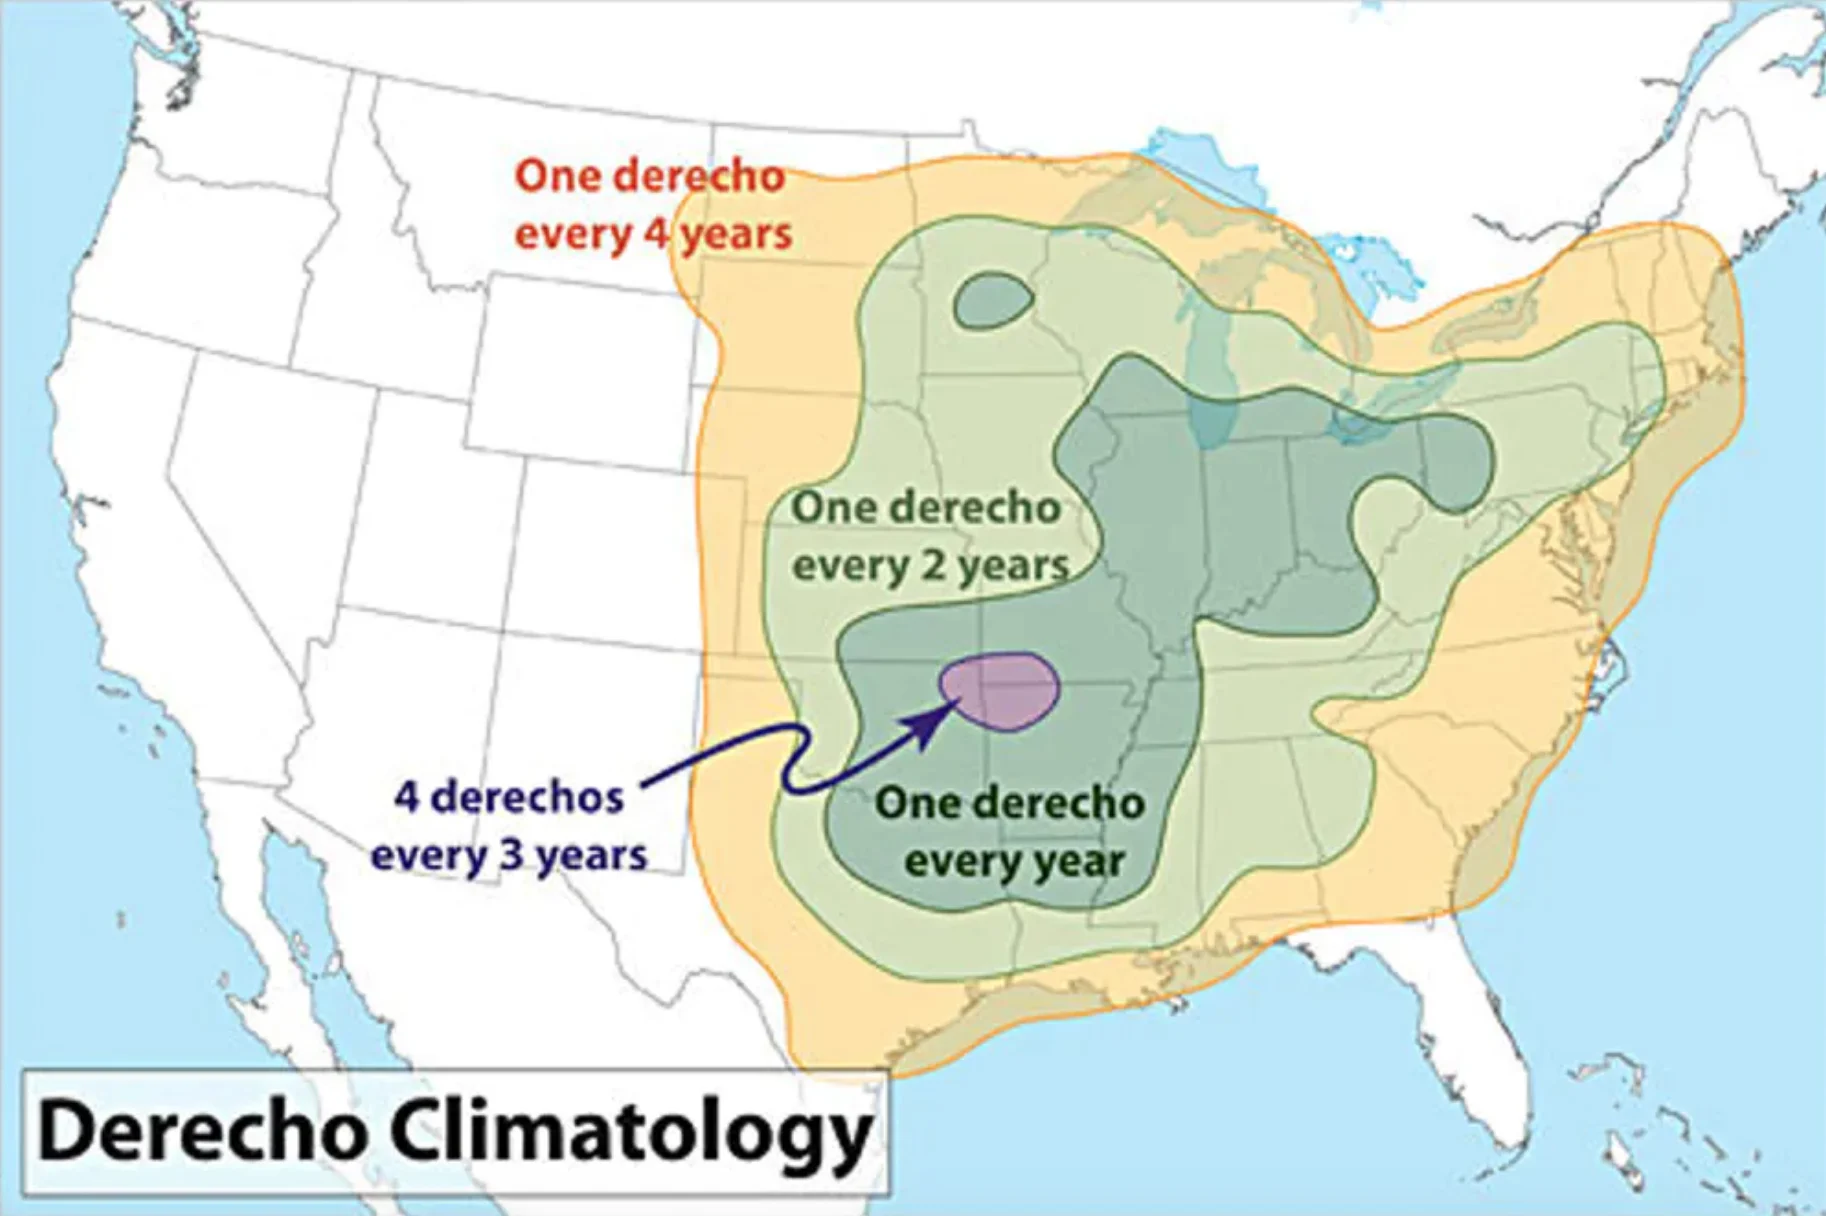 NOAA: Derecho climatology